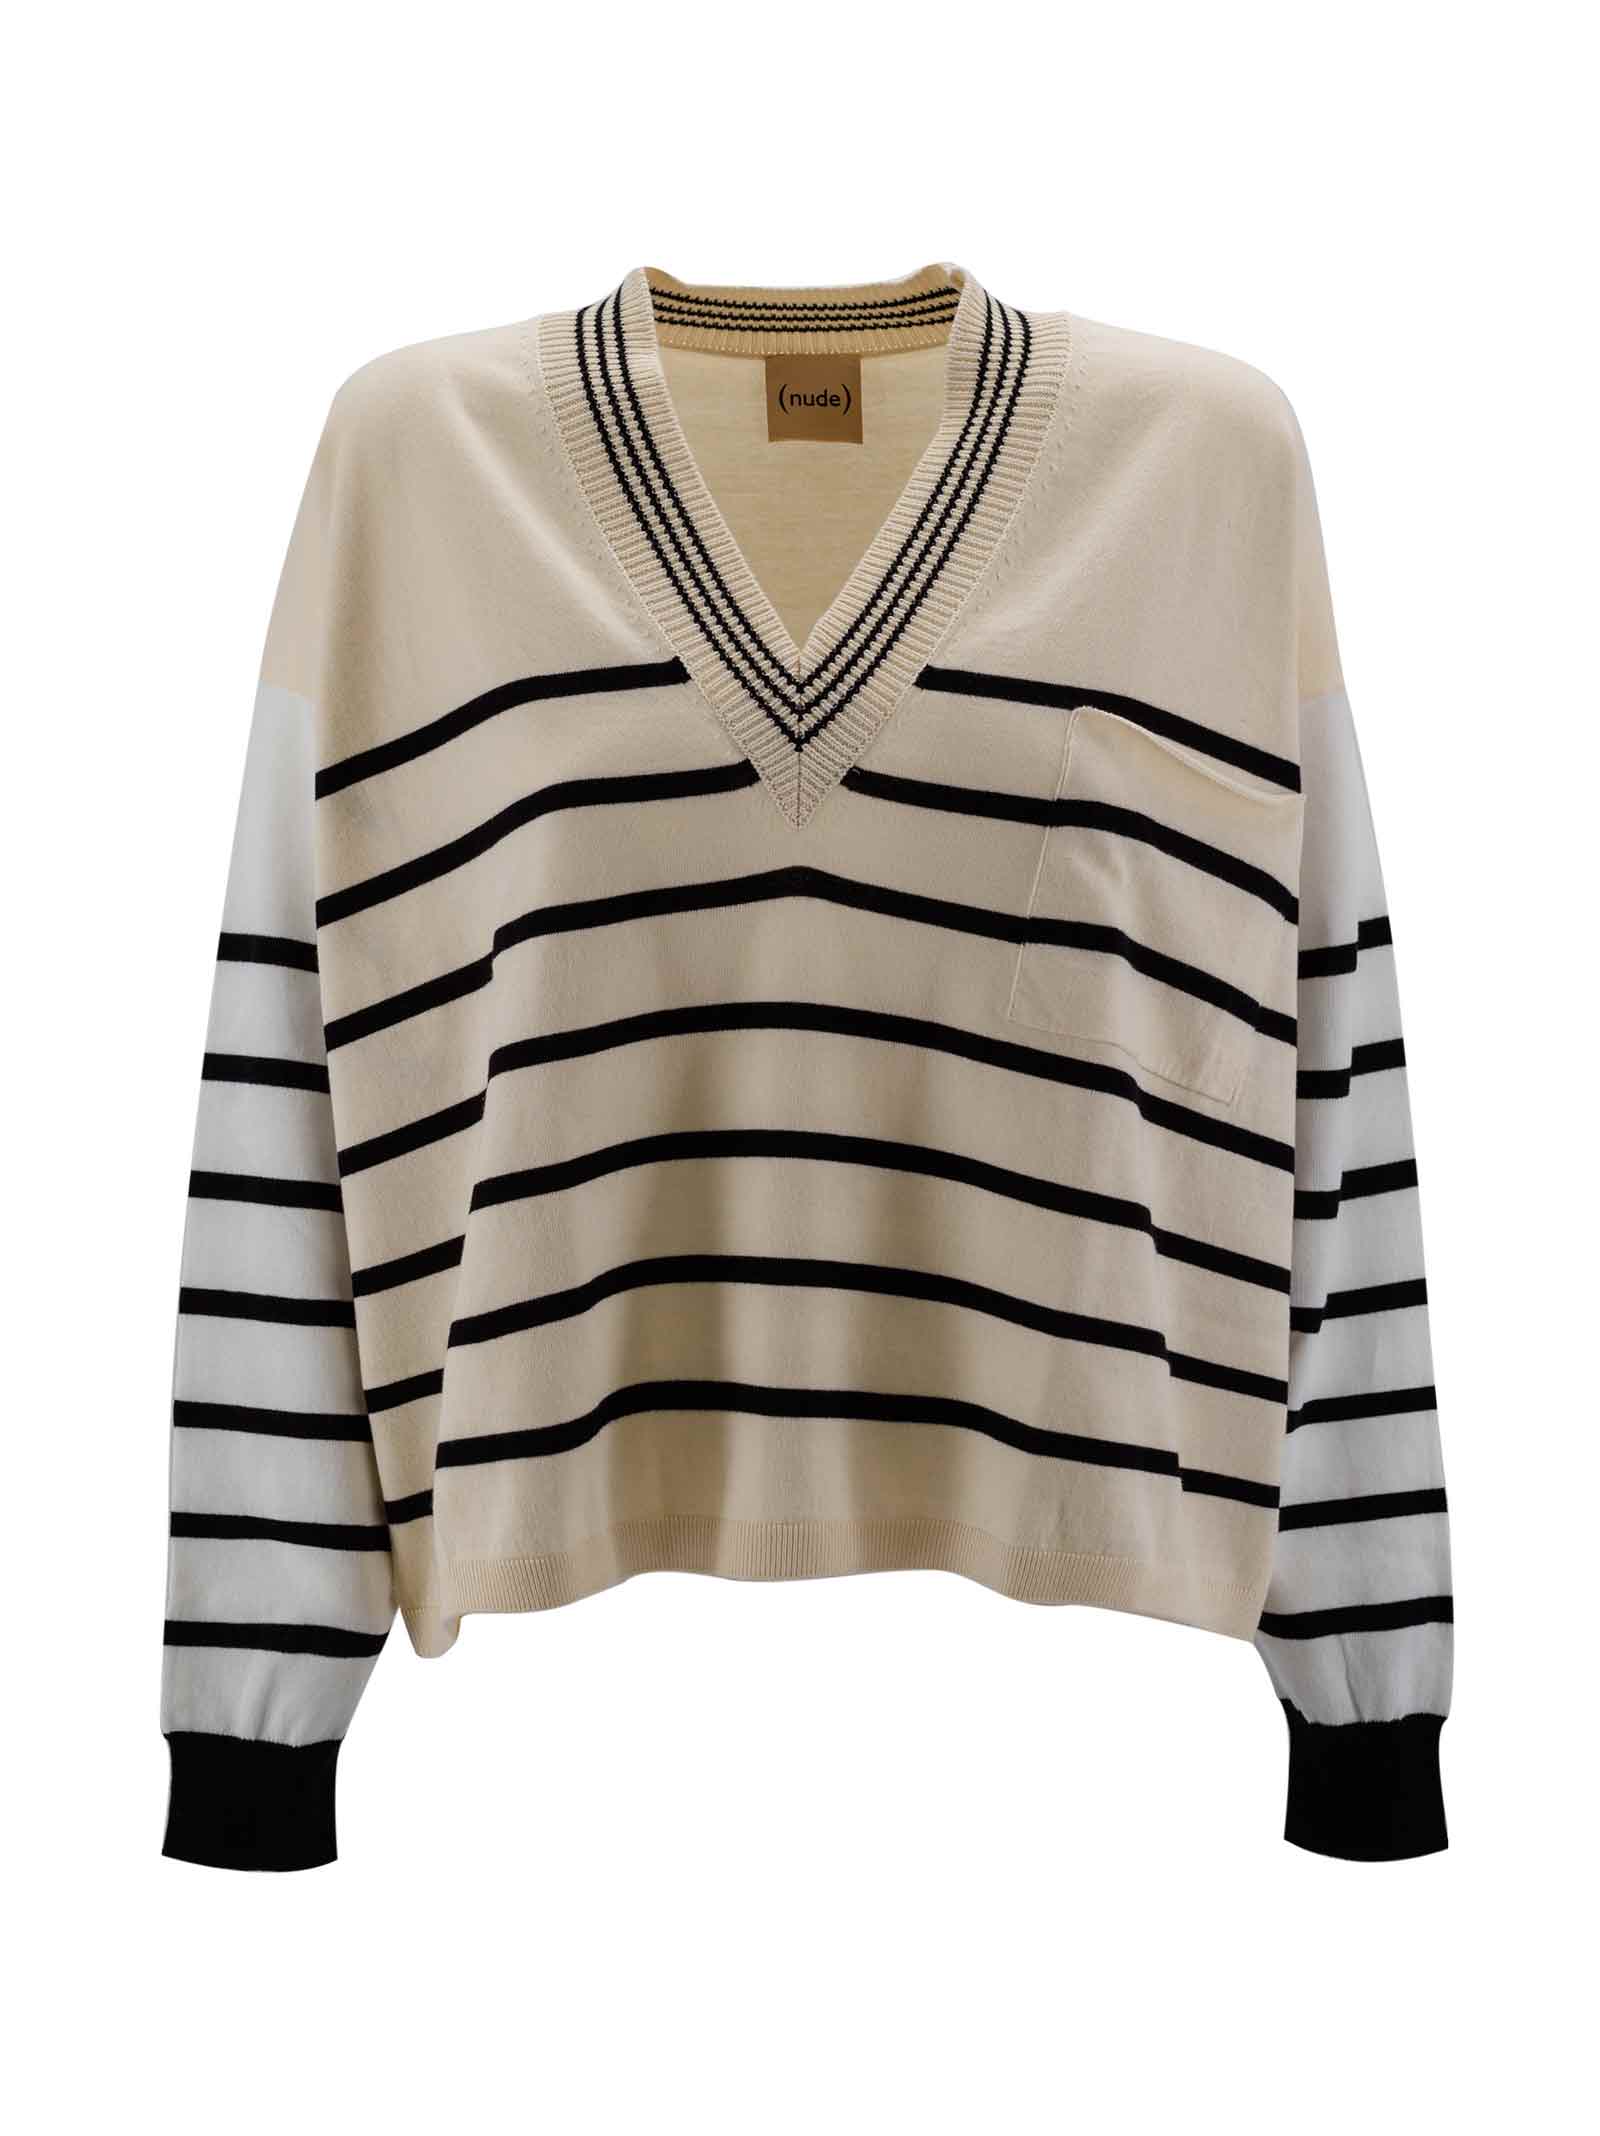 (nude) Cotton Striped Sweater